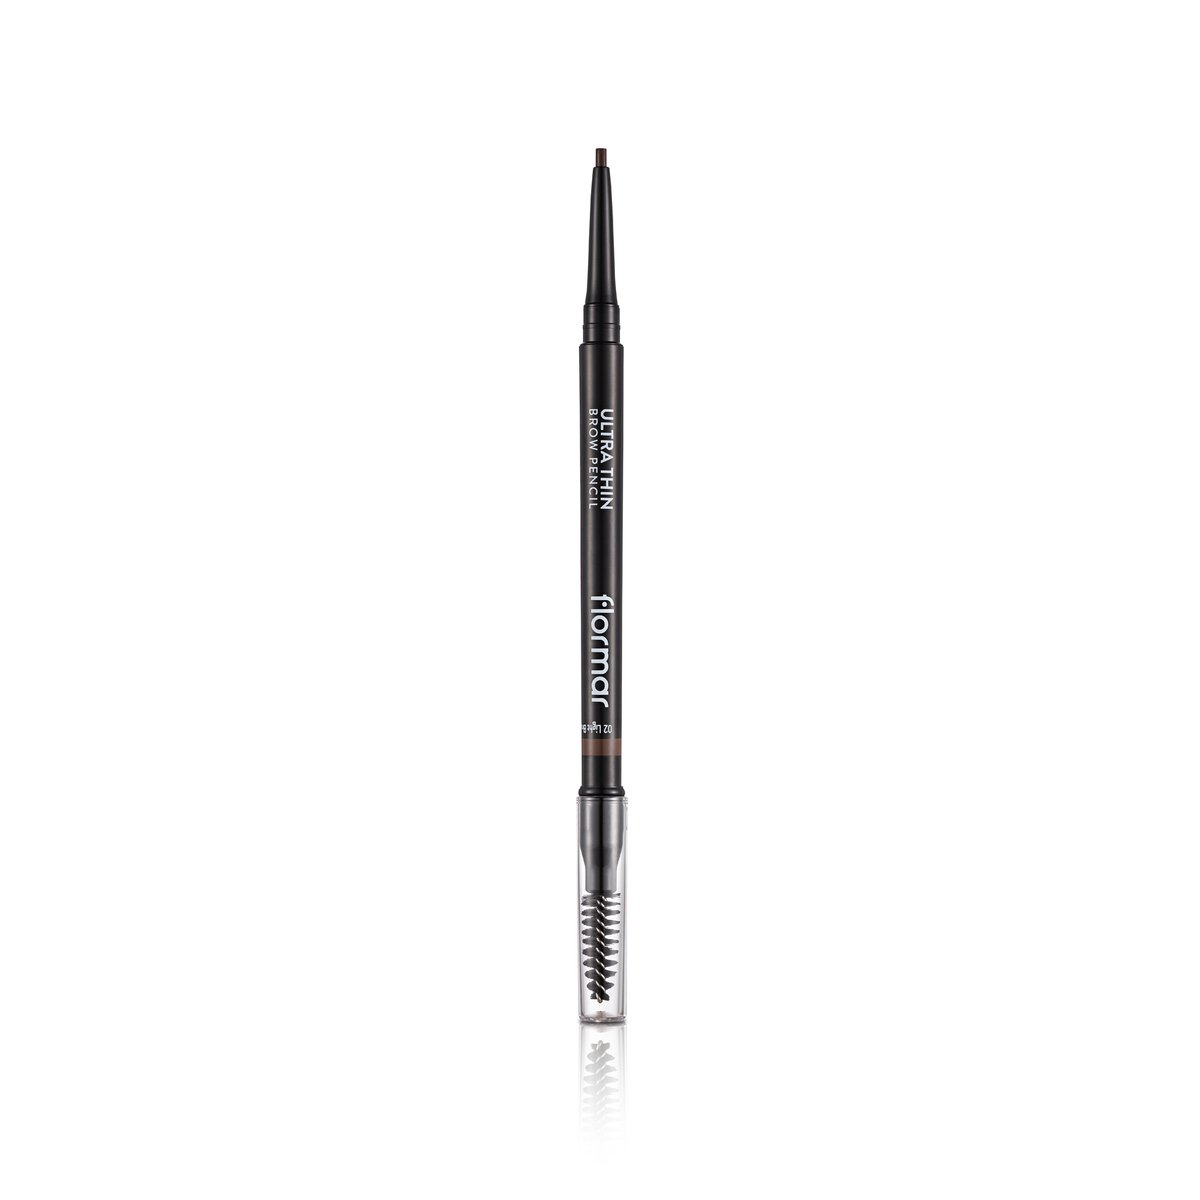 Flormar Ultra Thin Brow Pencil - 02 Light Brown 1pc